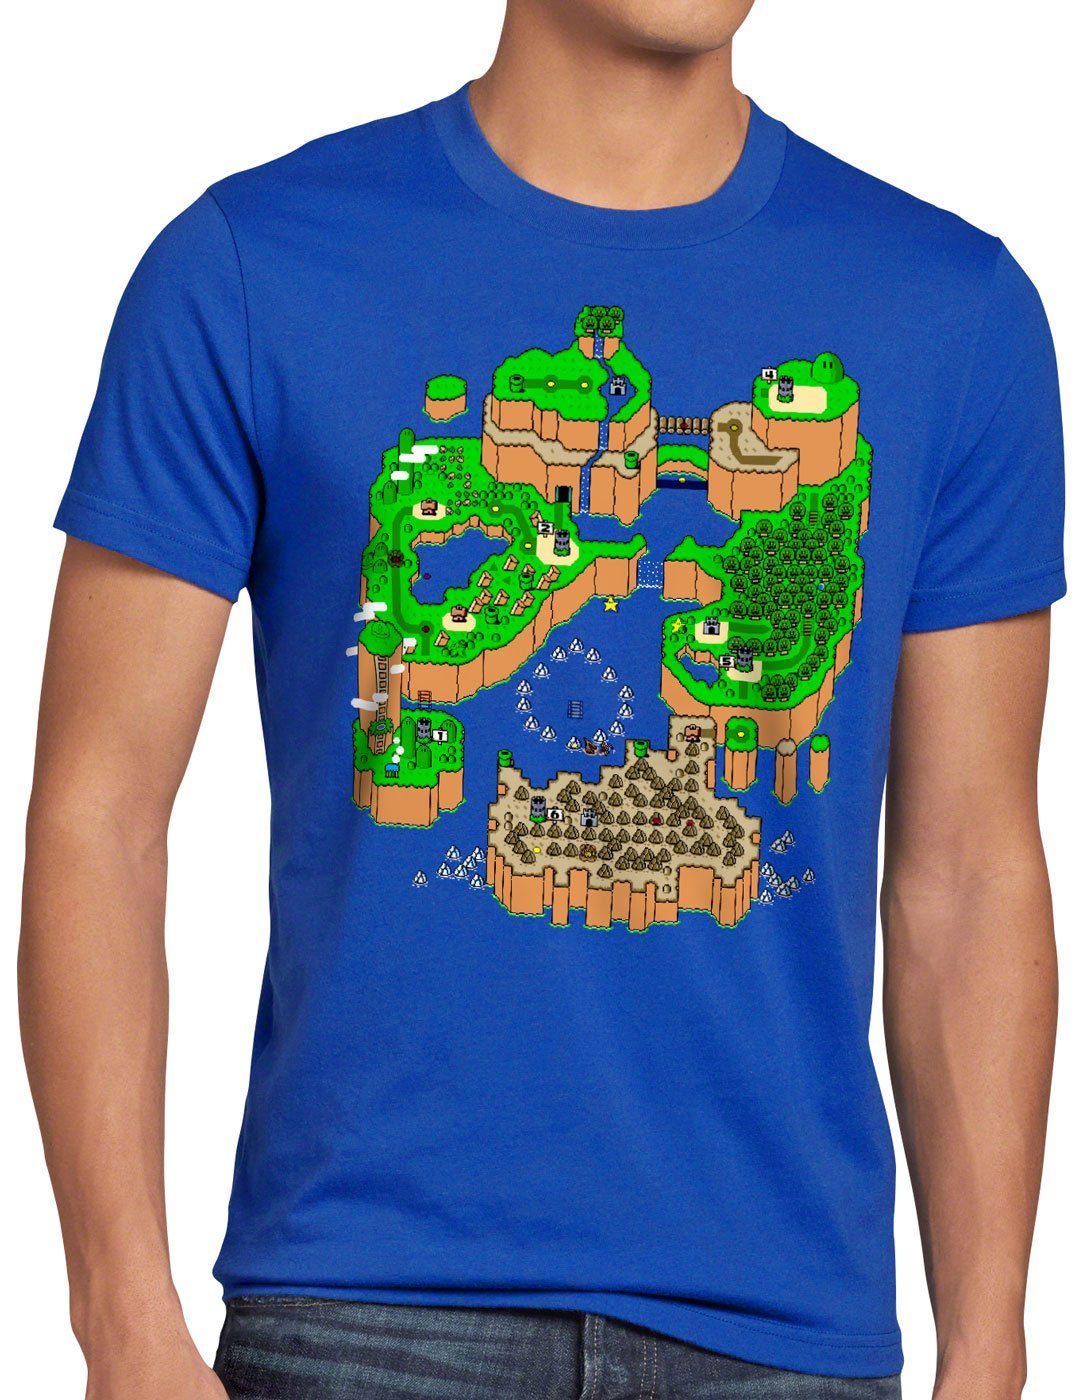 style3 Print-Shirt Herren T-Shirt Mario SNES Karte Videospiel Konsole n64